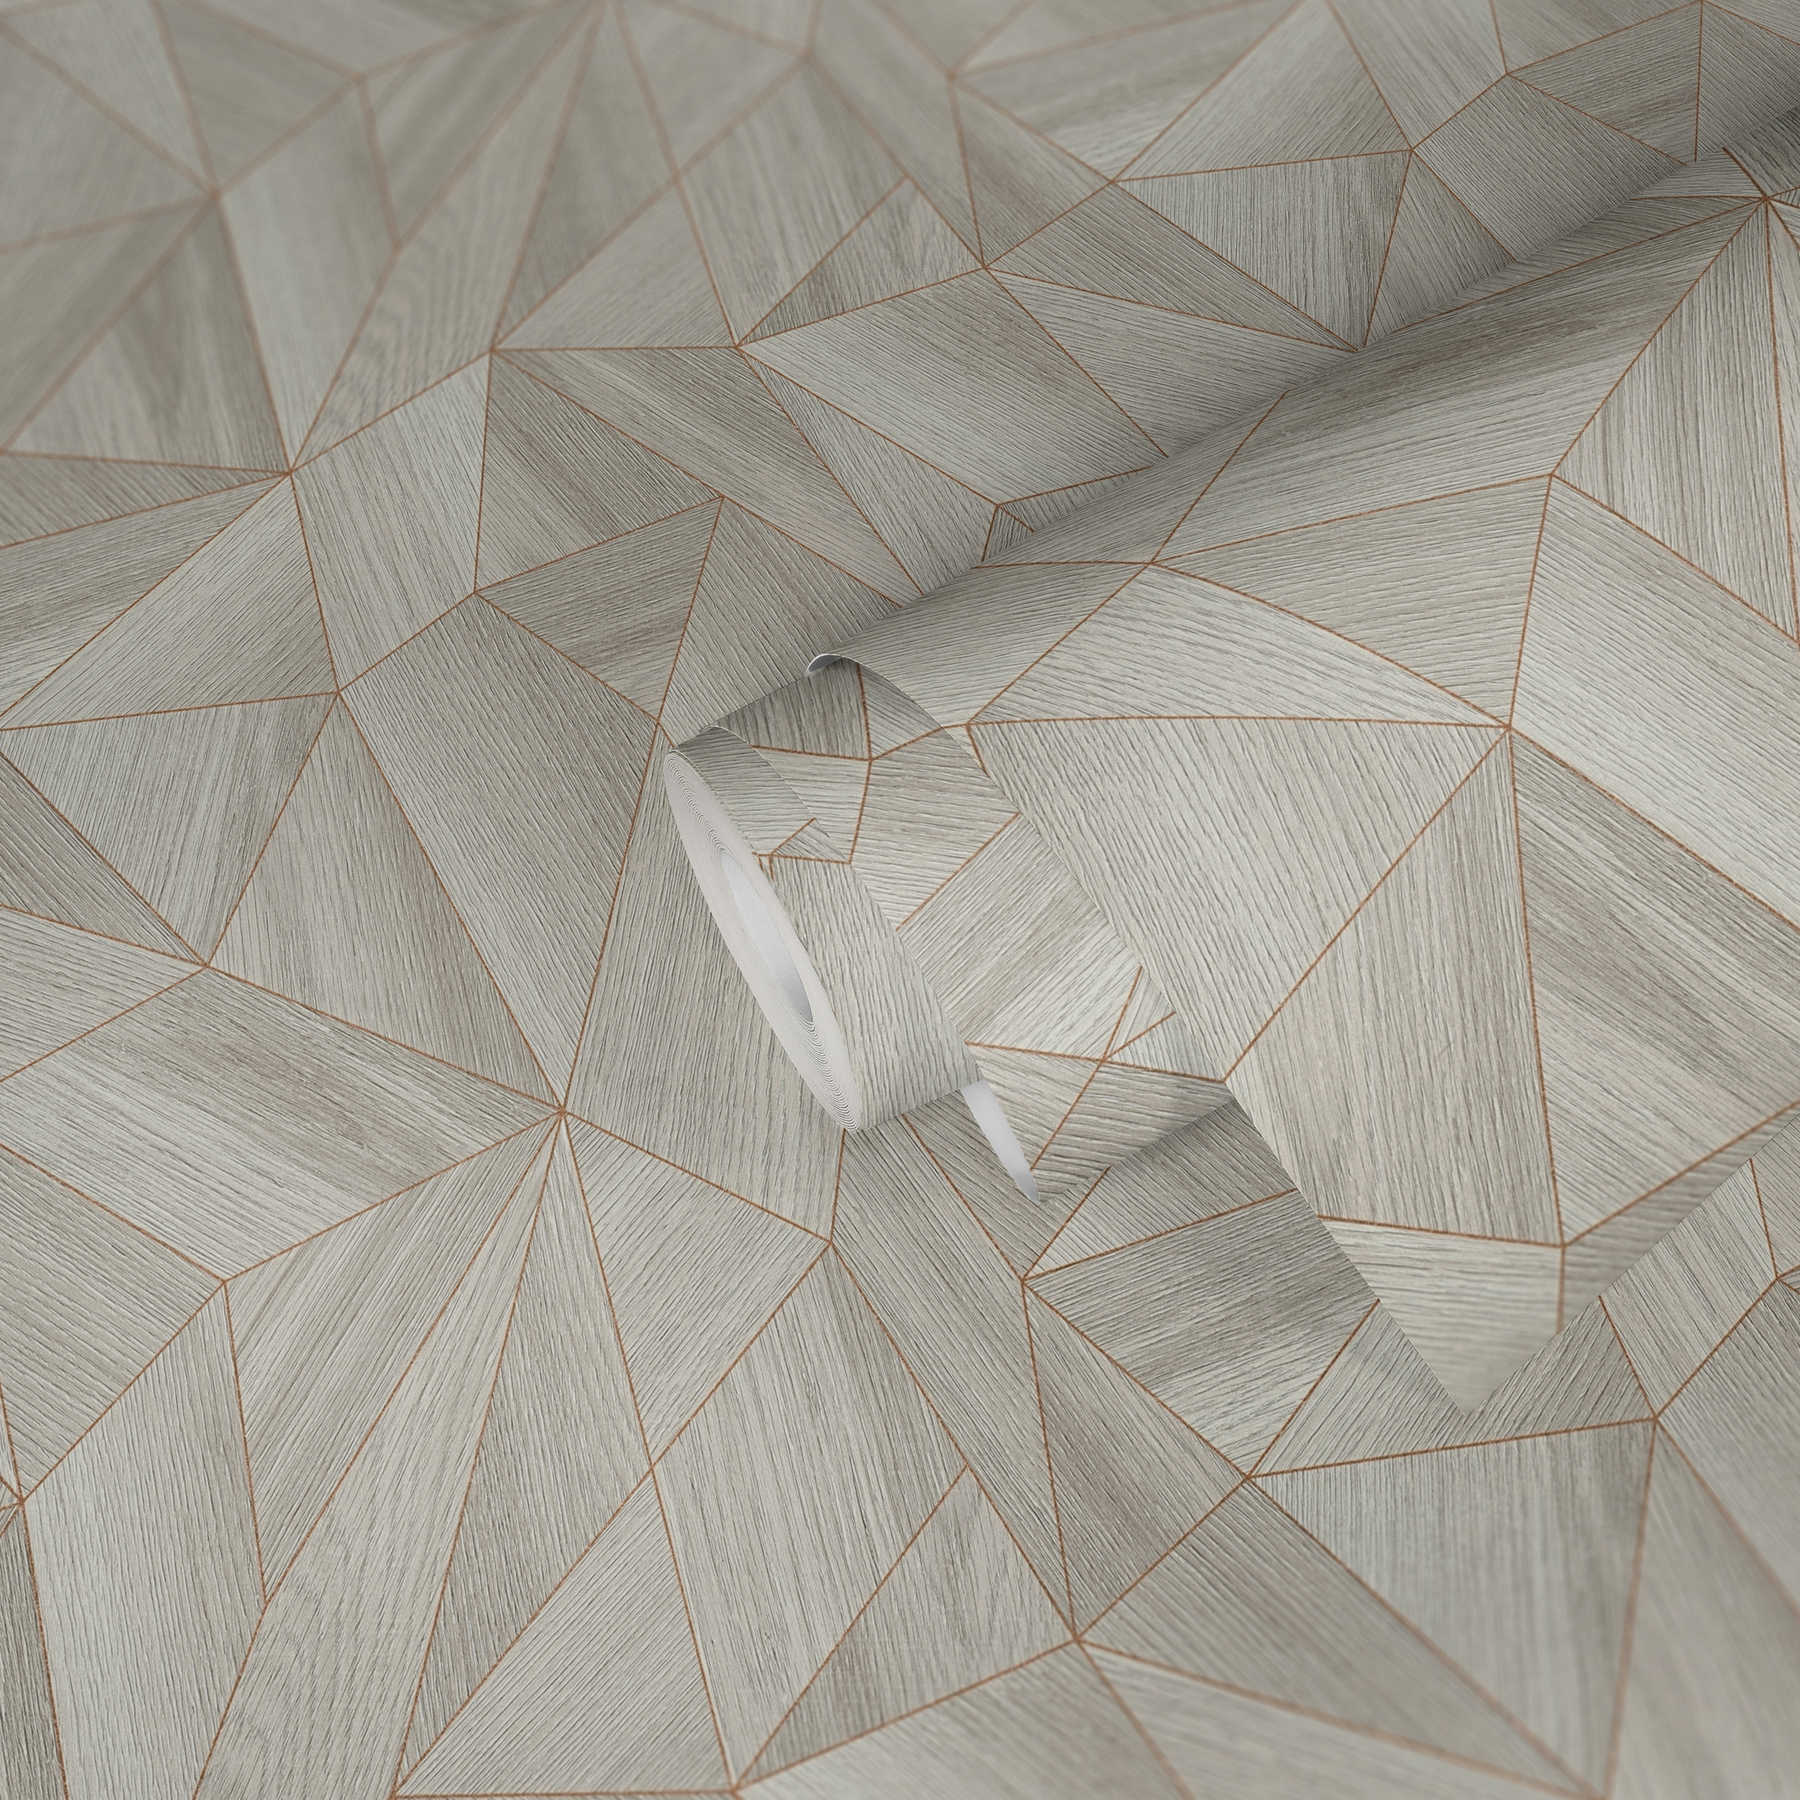             Holzoptik Tapete modernes Design & Metallic-Effekt – Grau, Gold
        